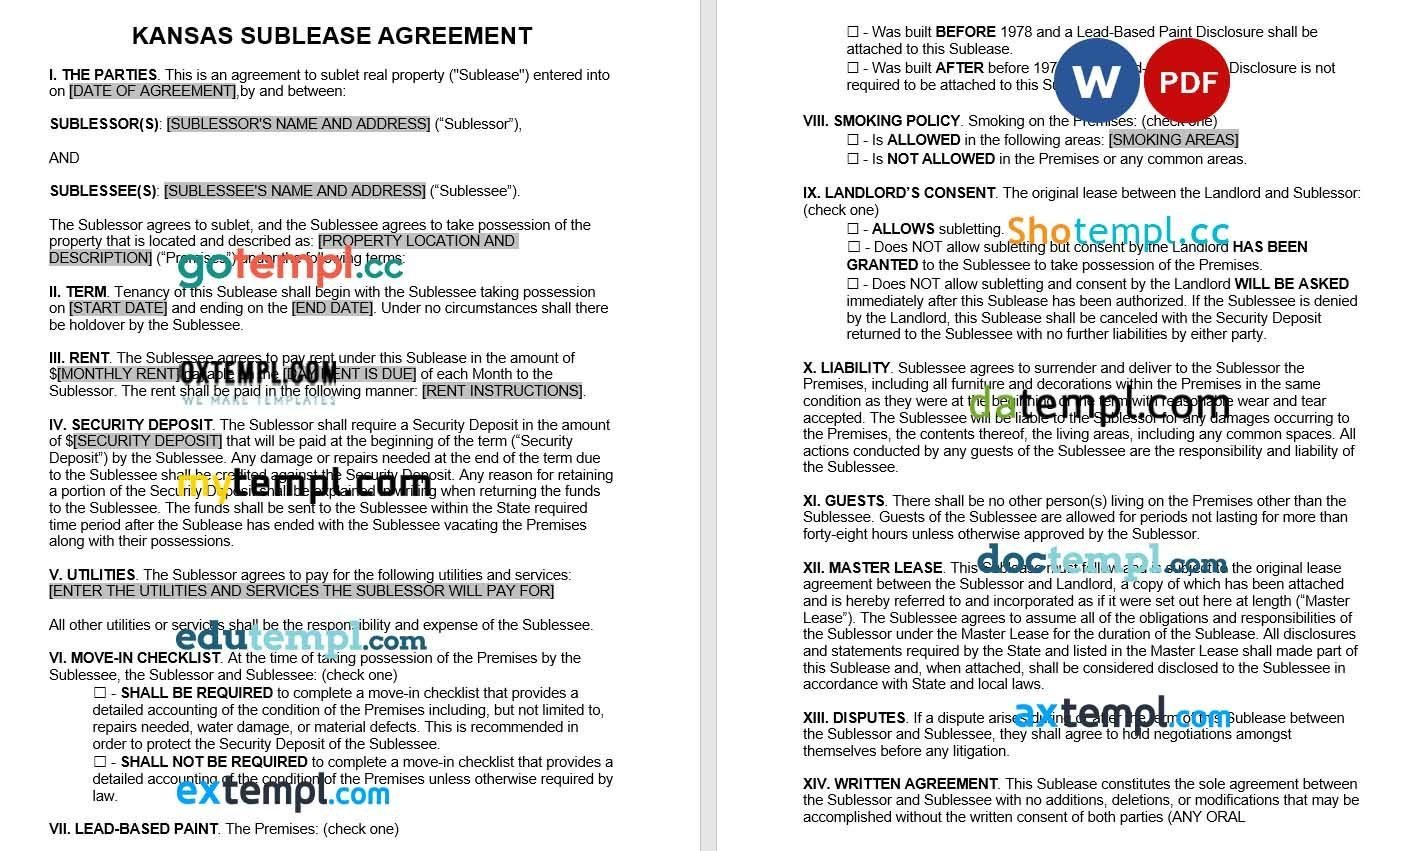 Kansas Sublease Agreement Word example, fully editable